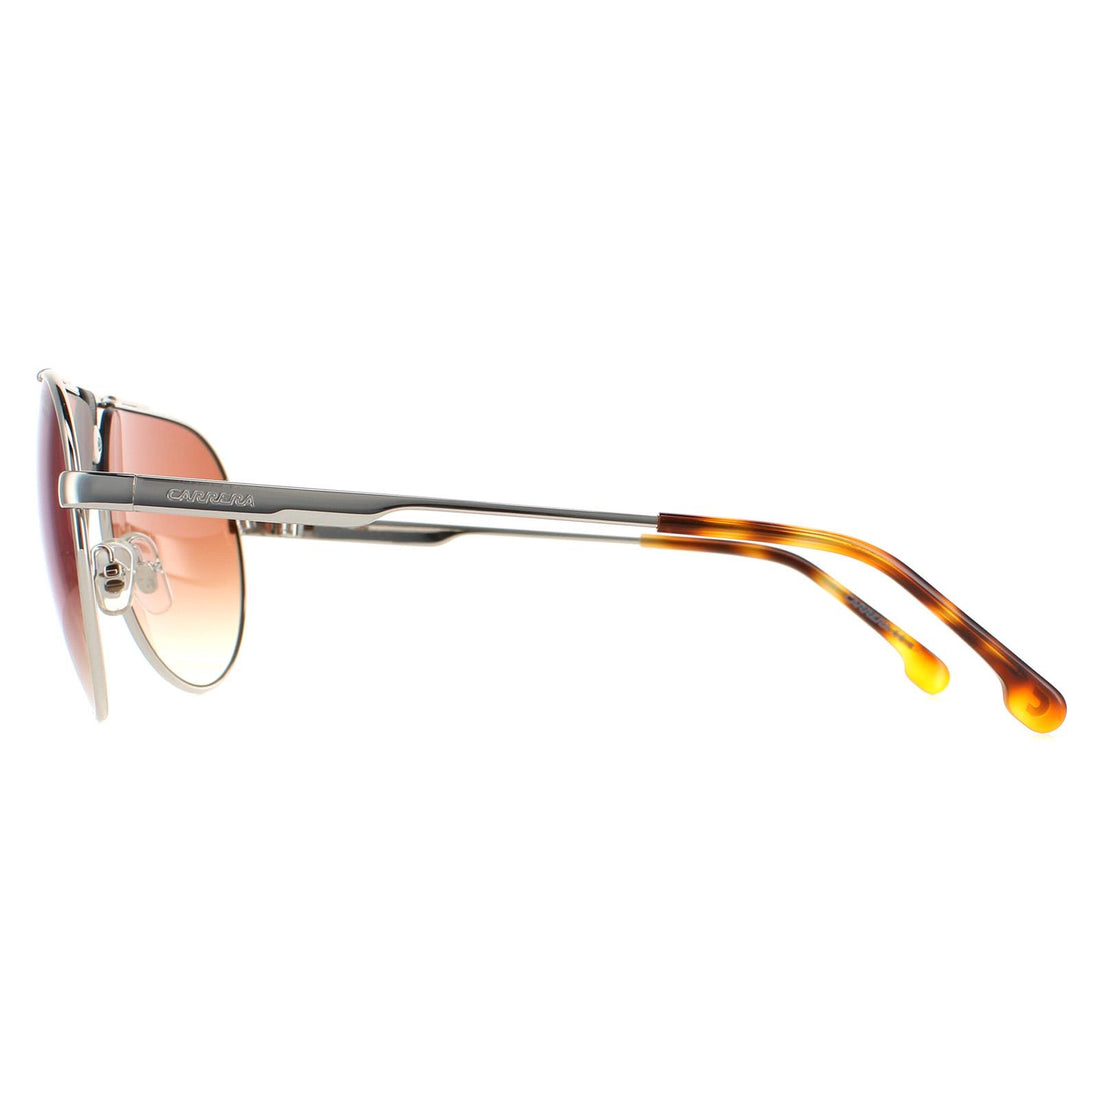 Carrera Sunglasses 1033/S 010 A8 Palladium Brown Blue Gradient